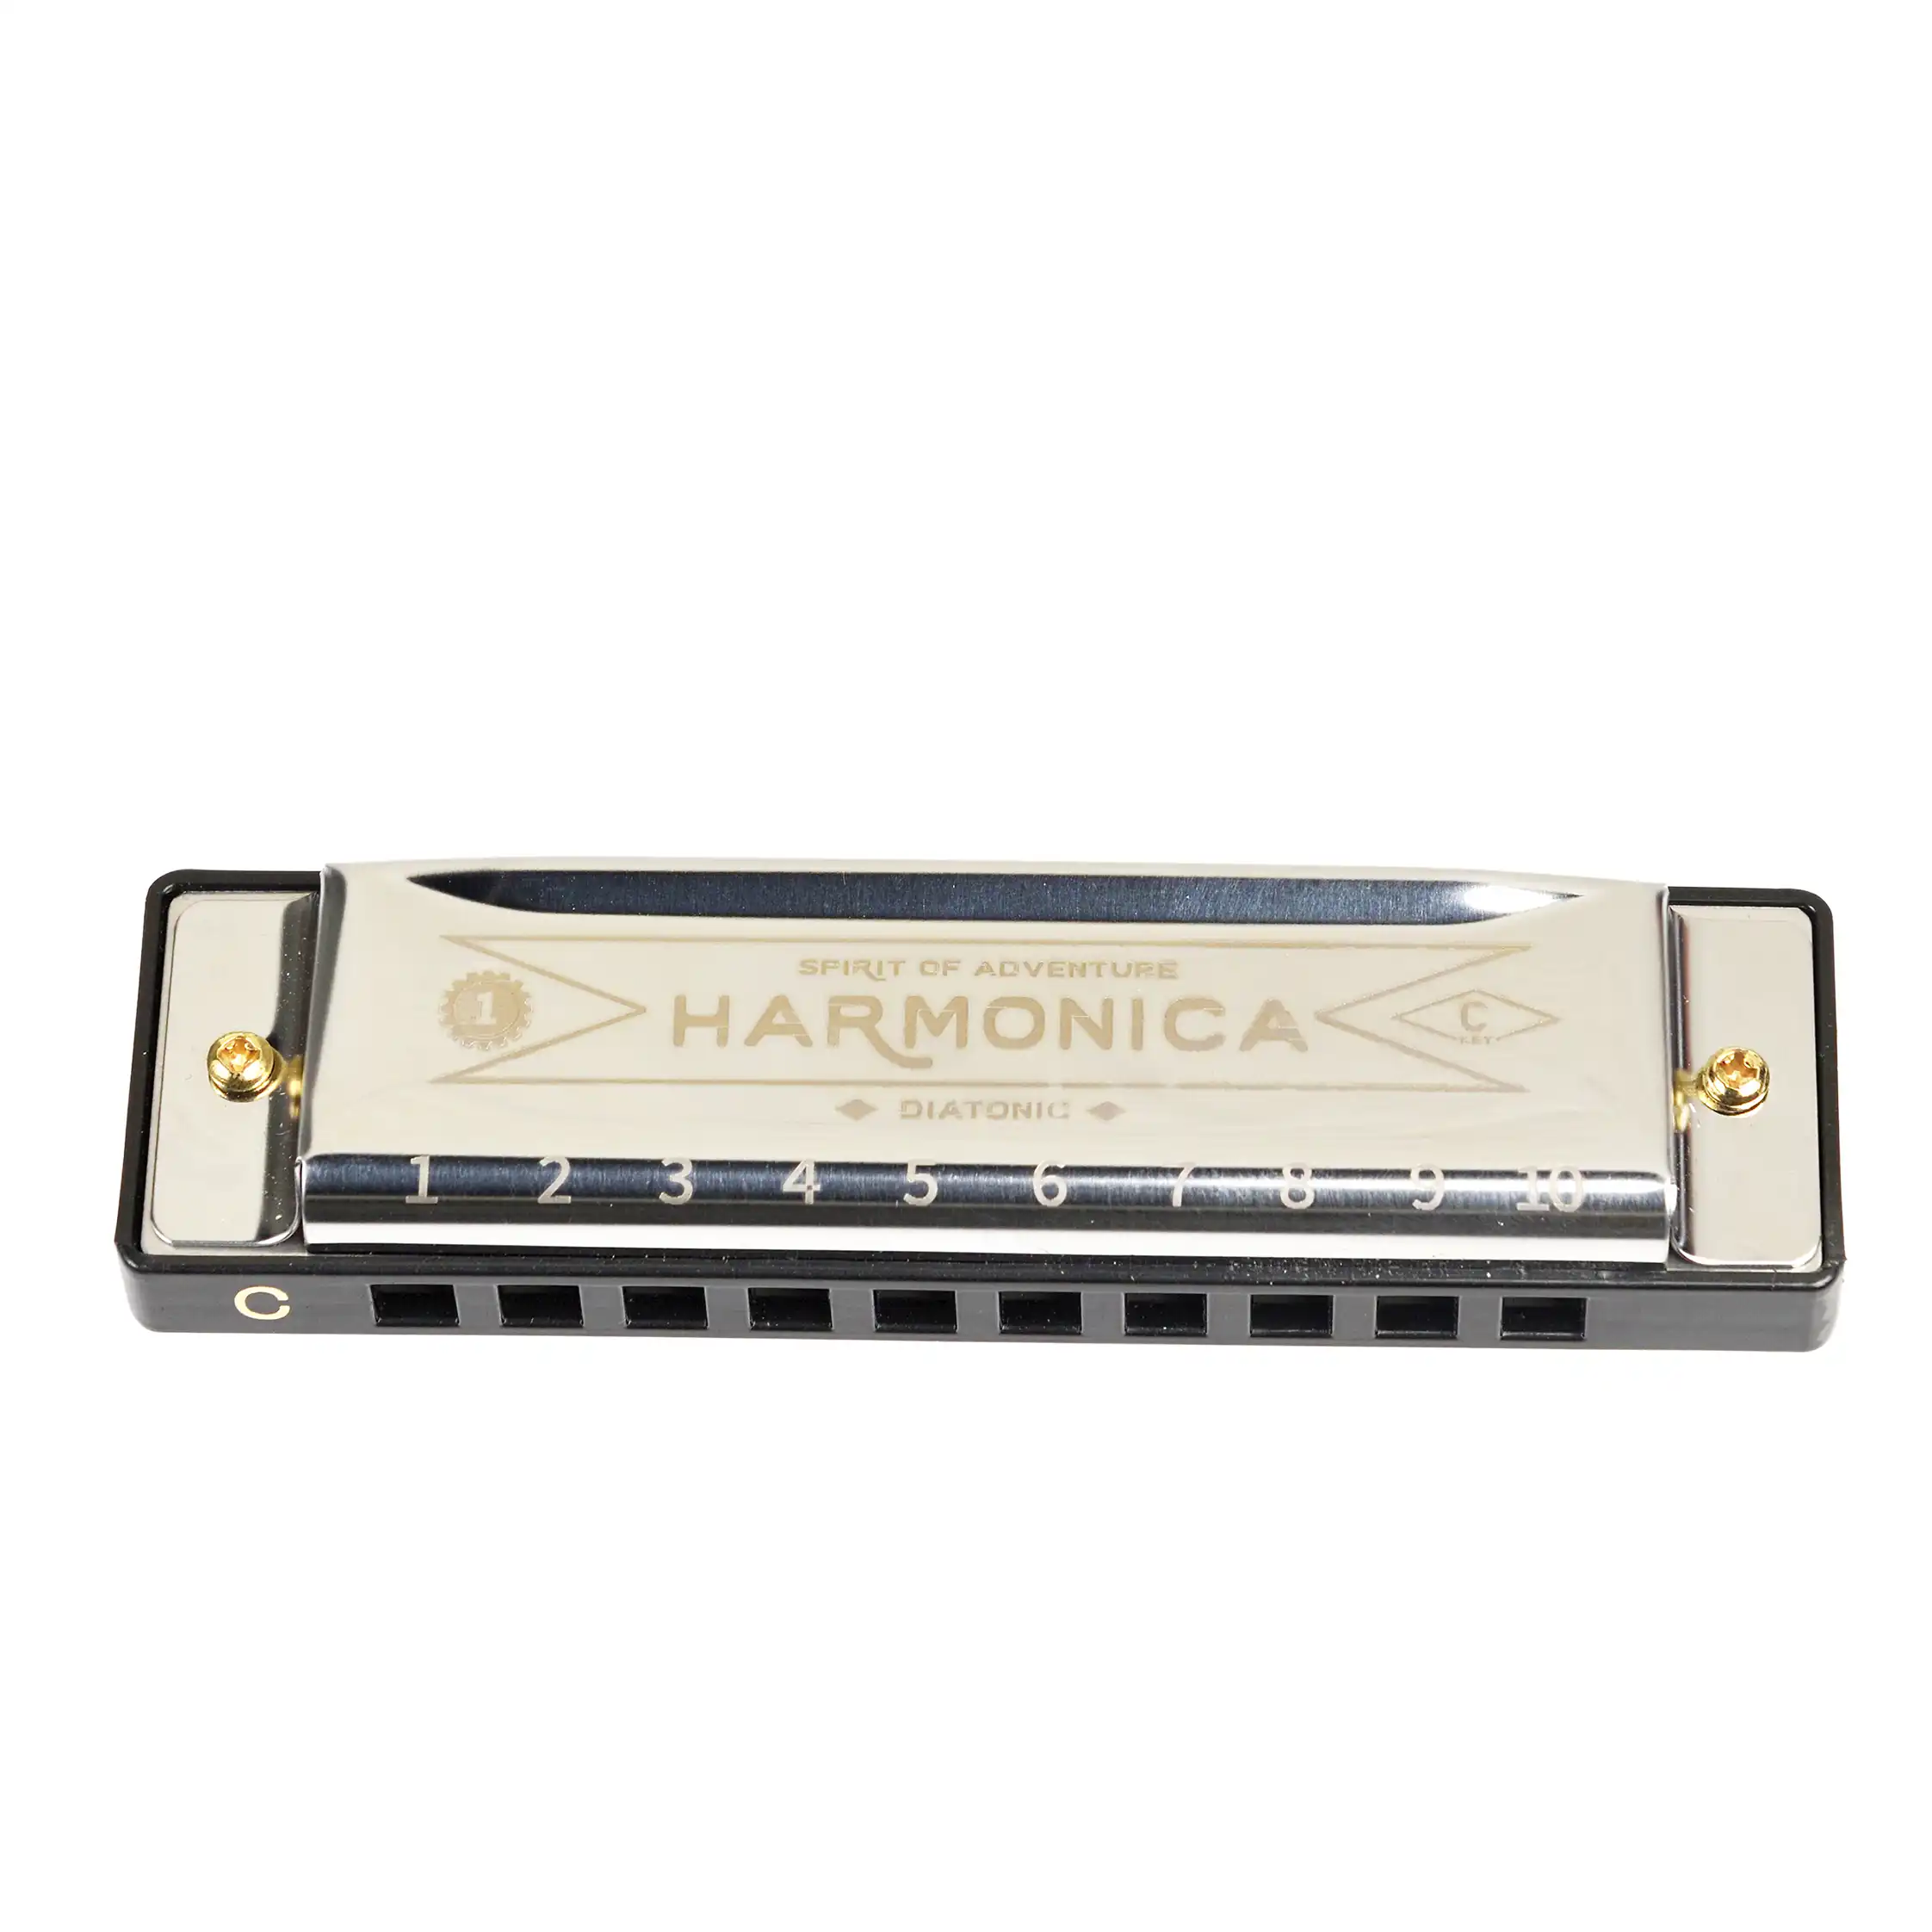 harmonica - spirit of adventure